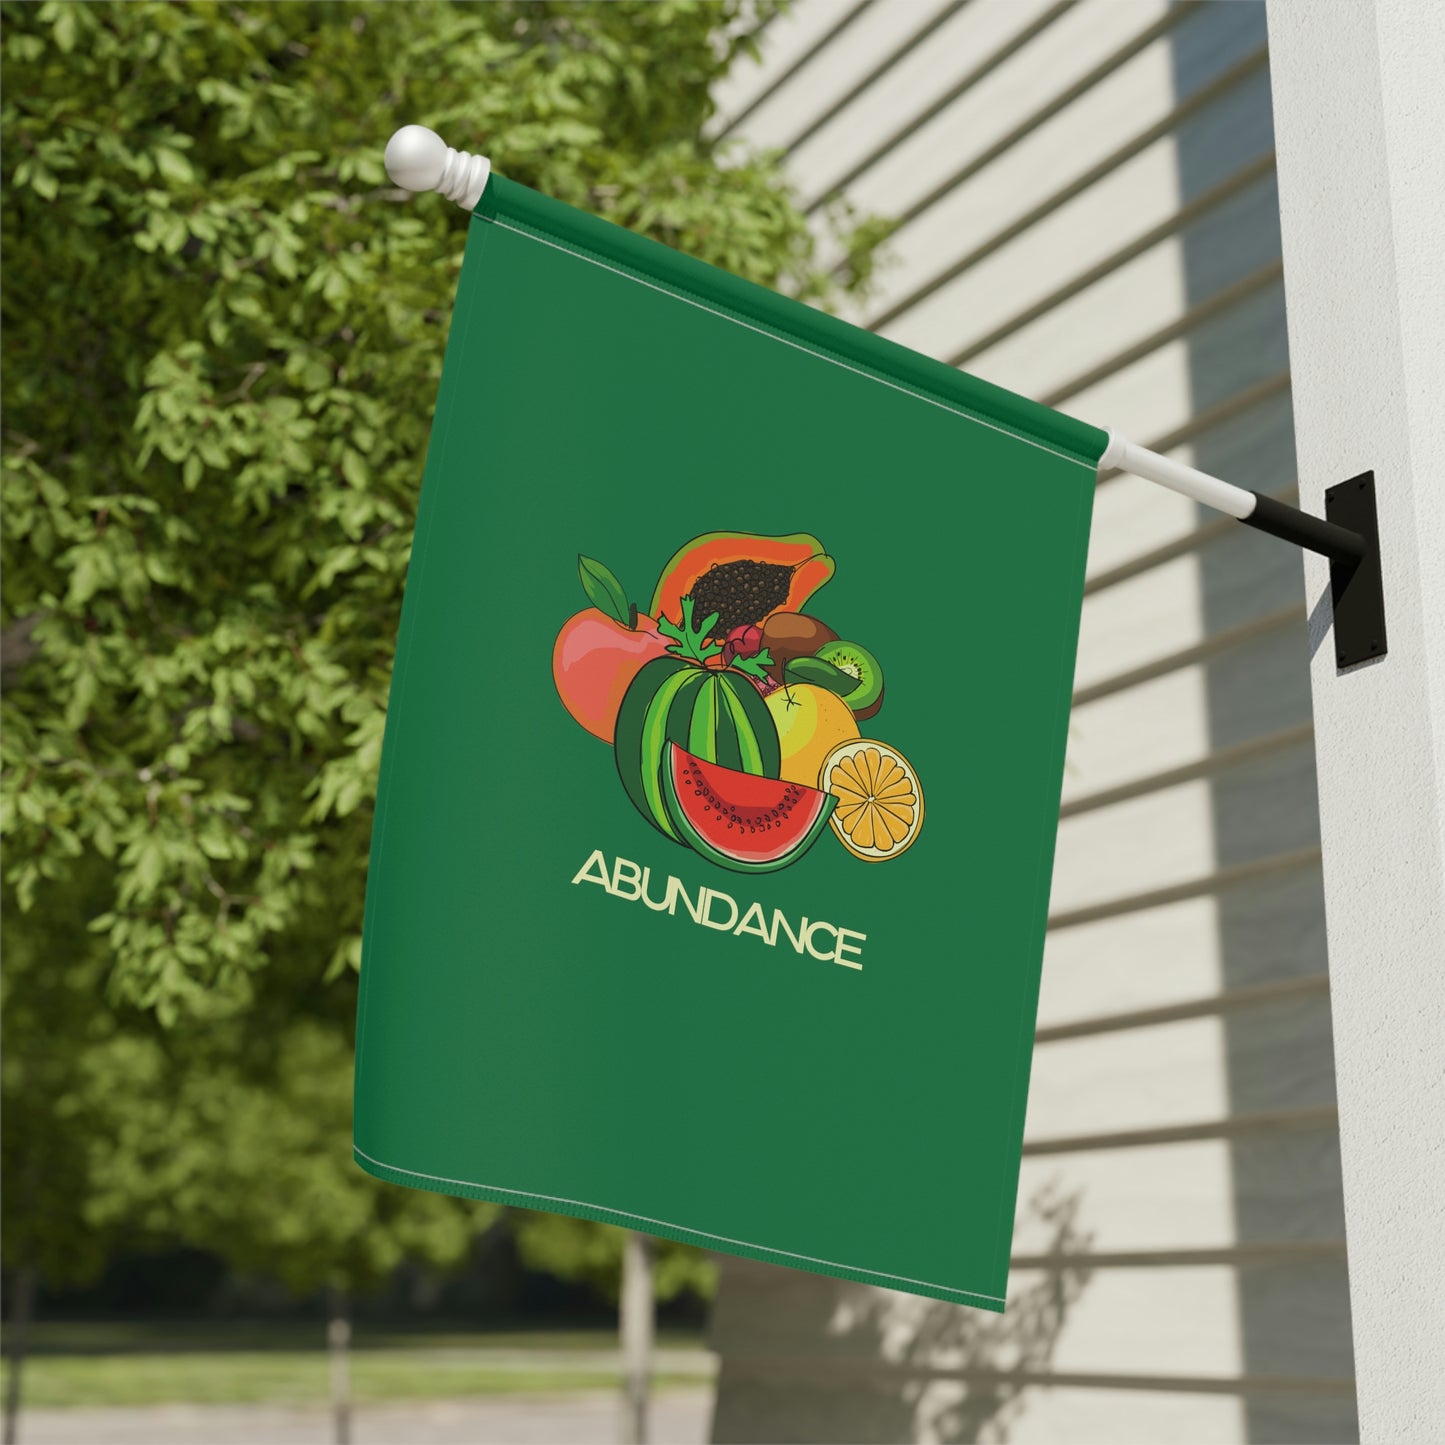 ABUNDANCE - Garden & House Banner - Green